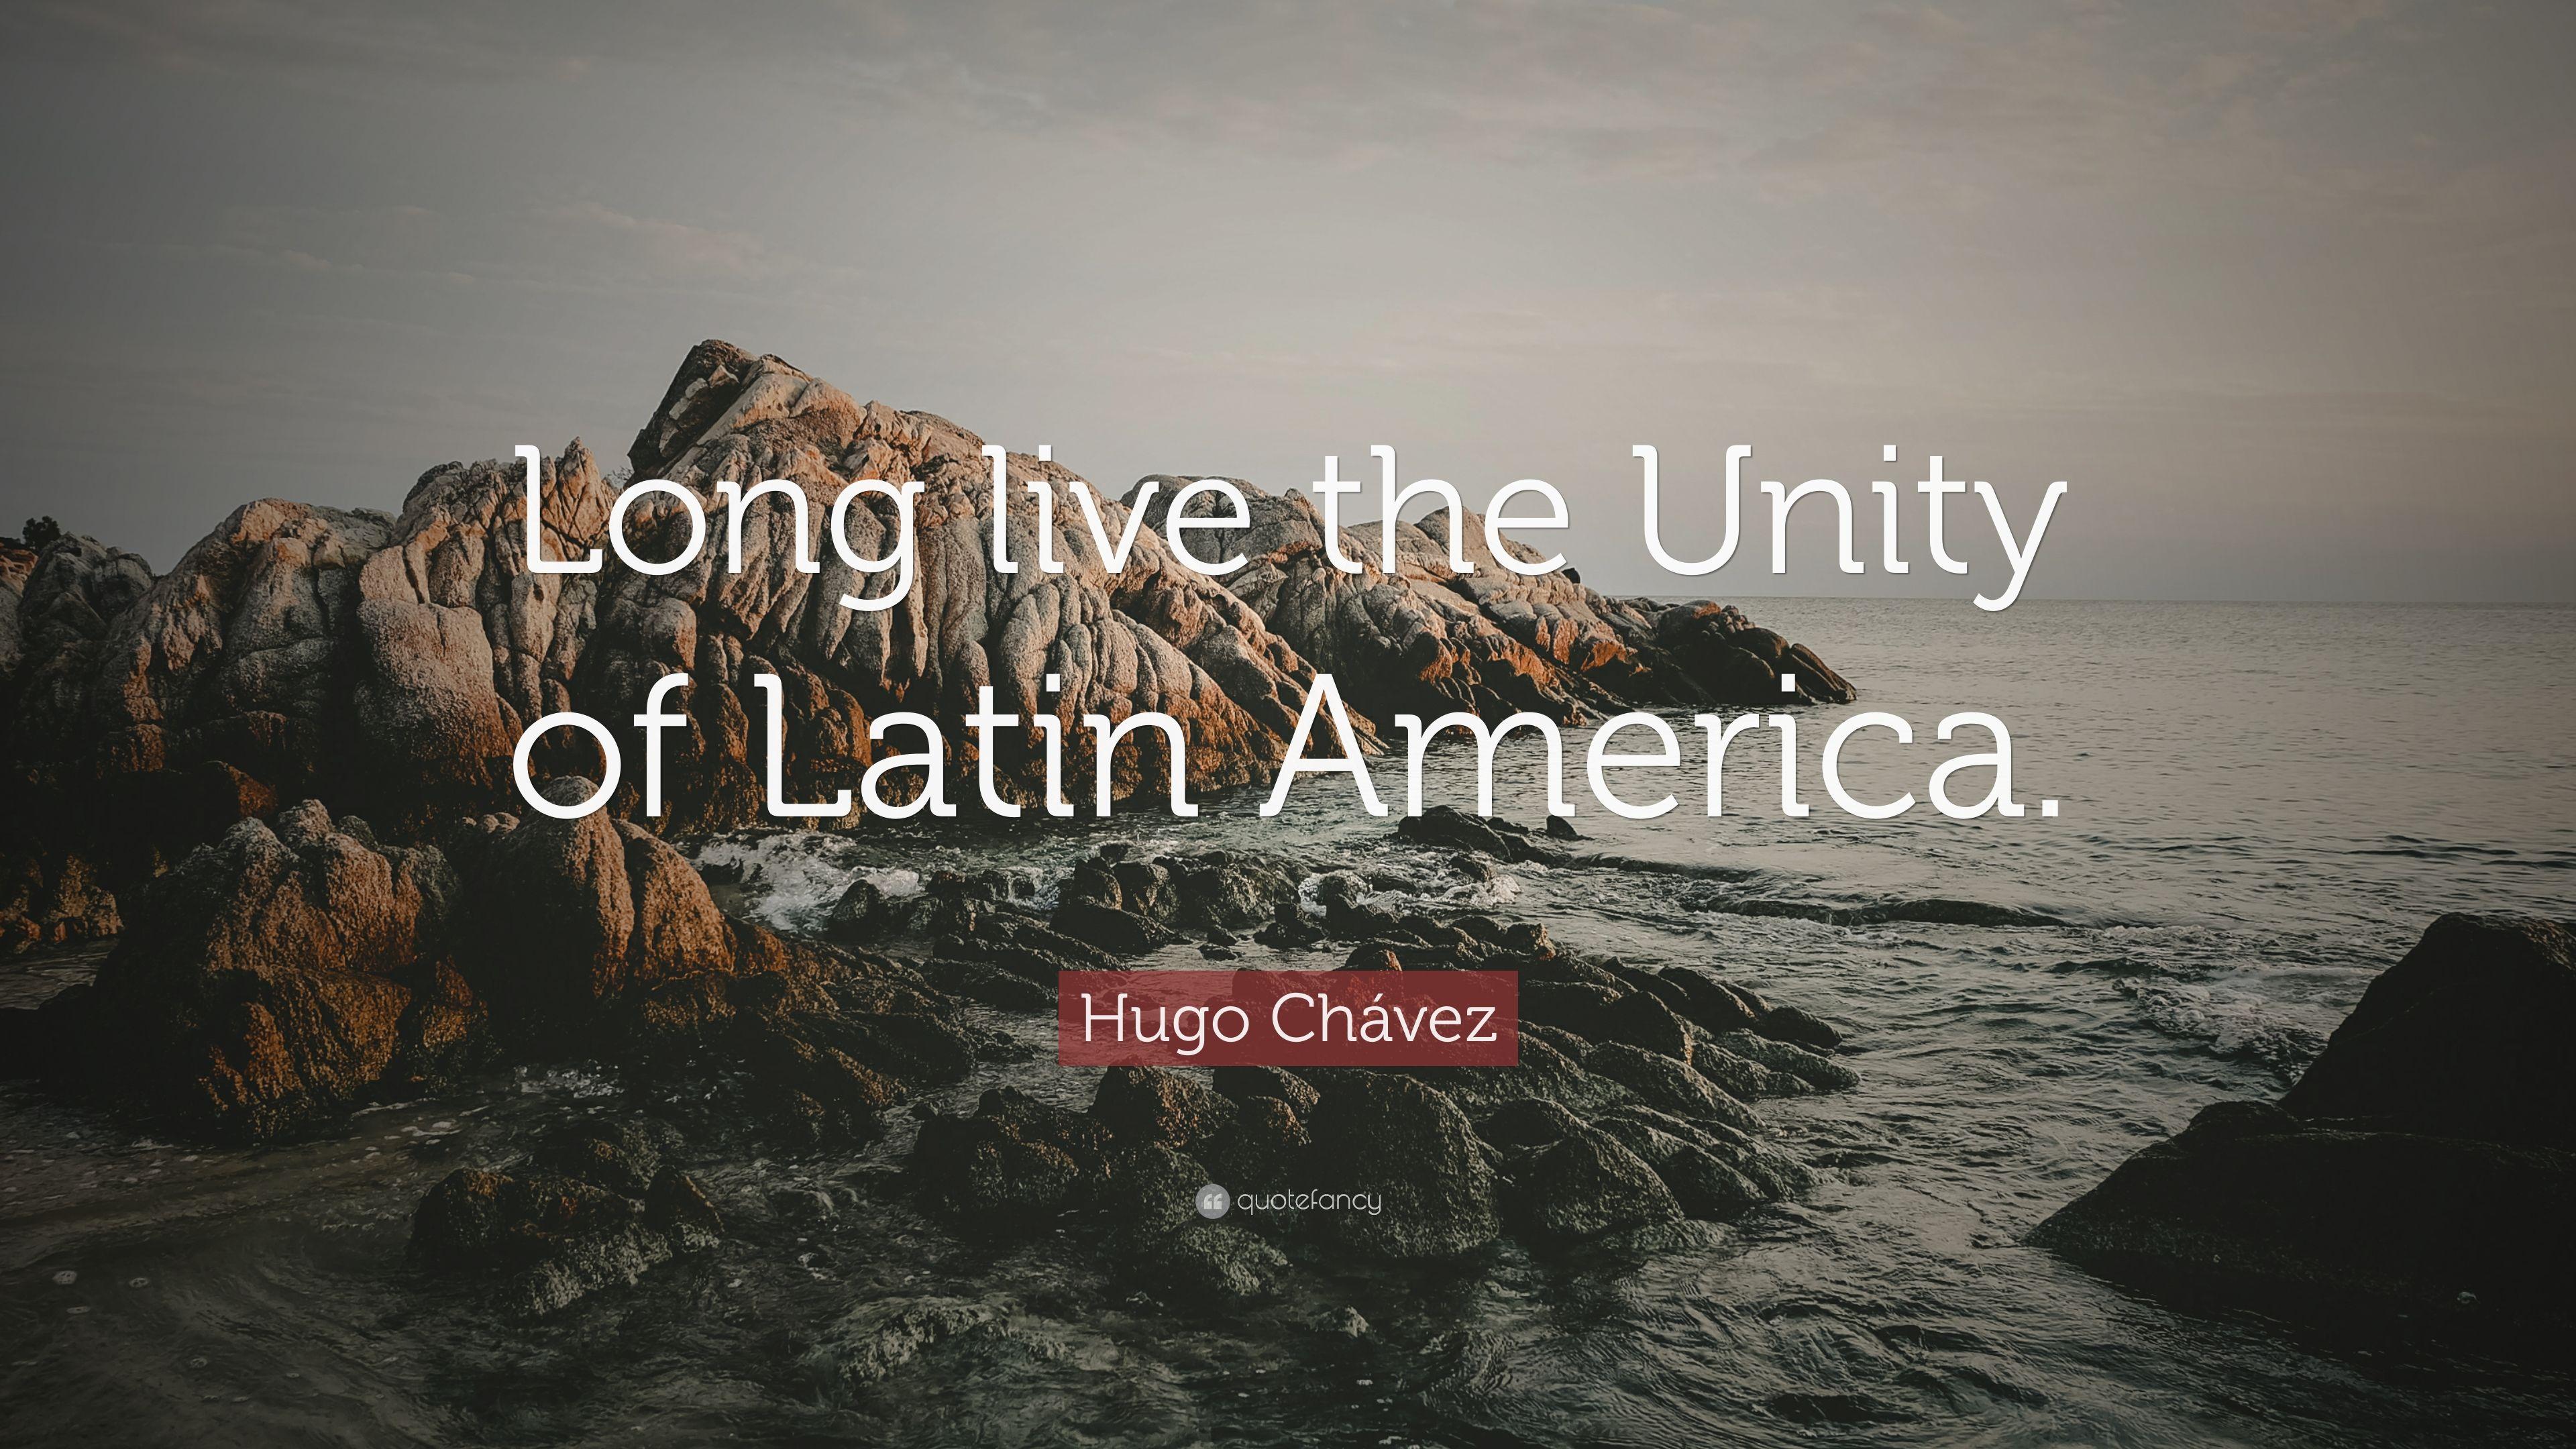 Hugo Chávez Quote: “Long live the Unity of Latin America.” 7